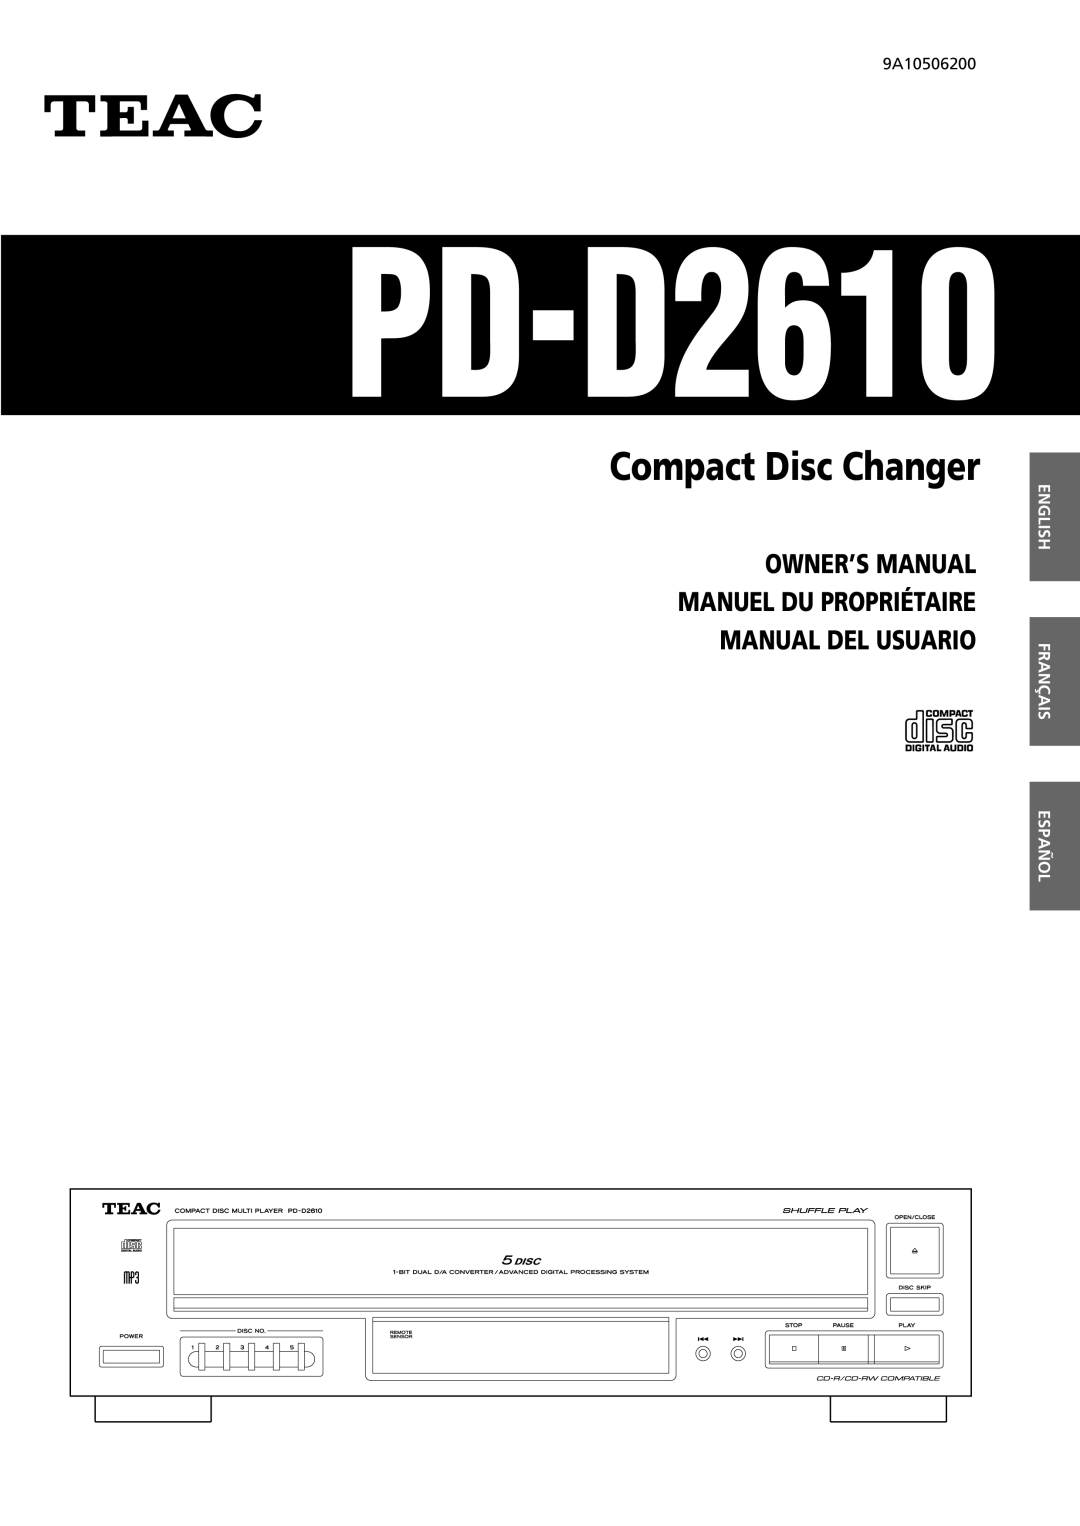 Teac PD-D2610 owner manual Manual Del Usuario, English Français Español, Compact Disc Changer 